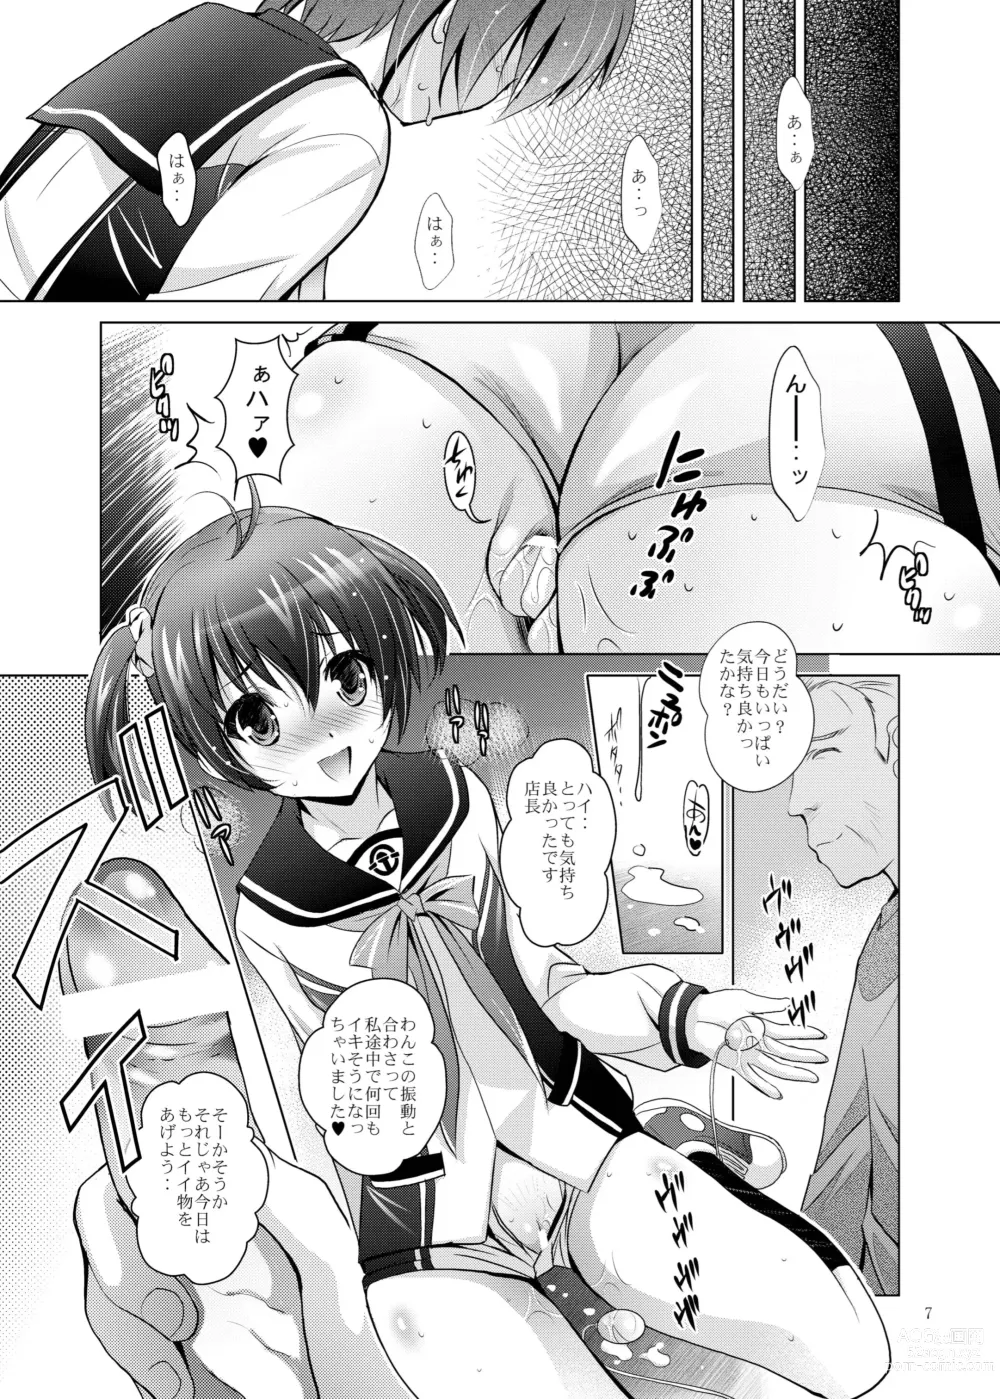 Page 7 of doujinshi Mousou Mini Theater 32